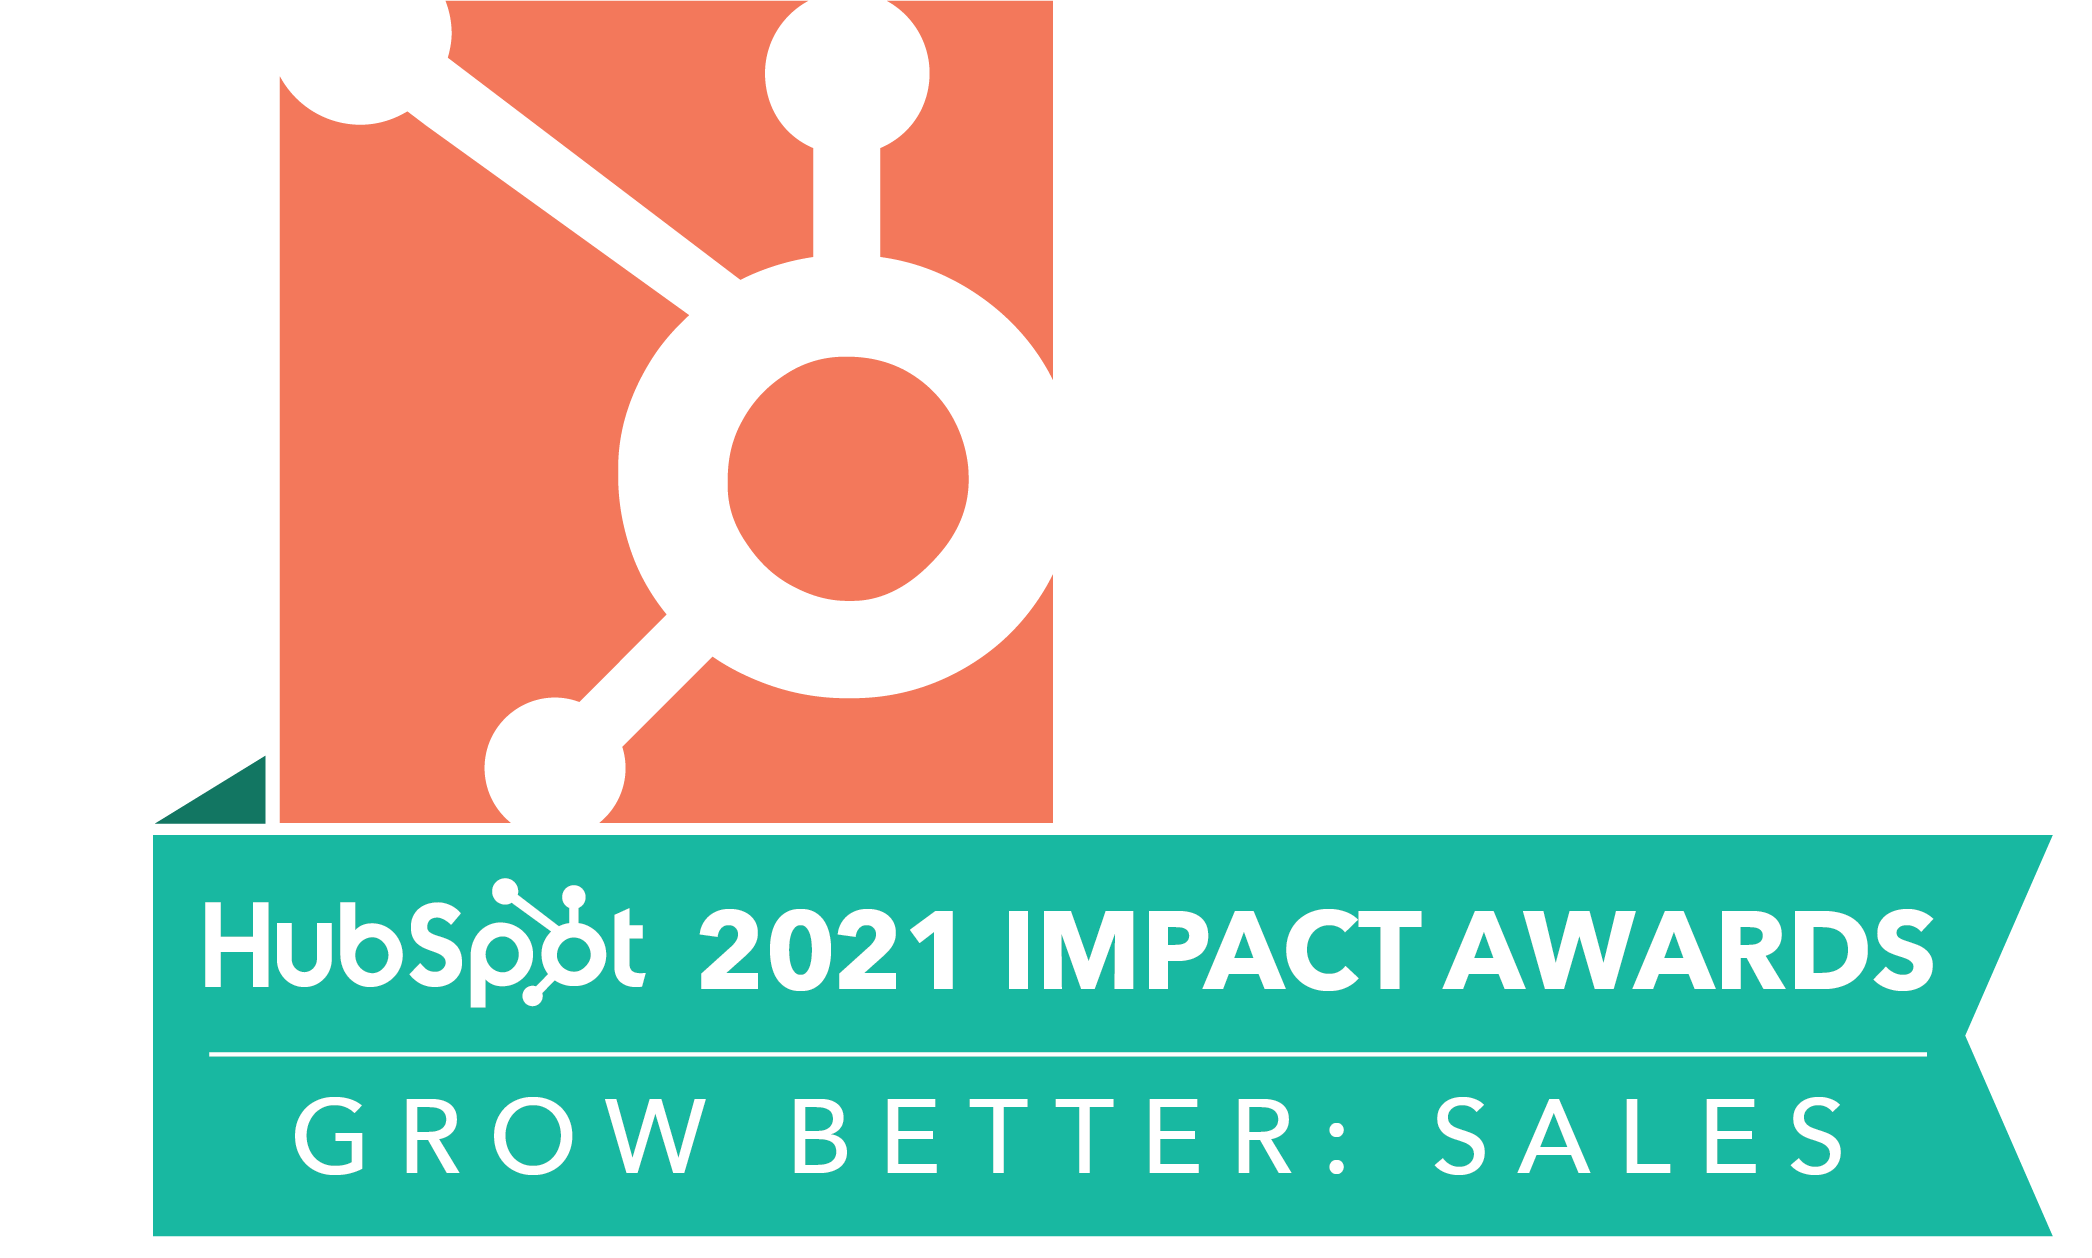 Hubspot 2021 Impact Awards Grow Better: Sales